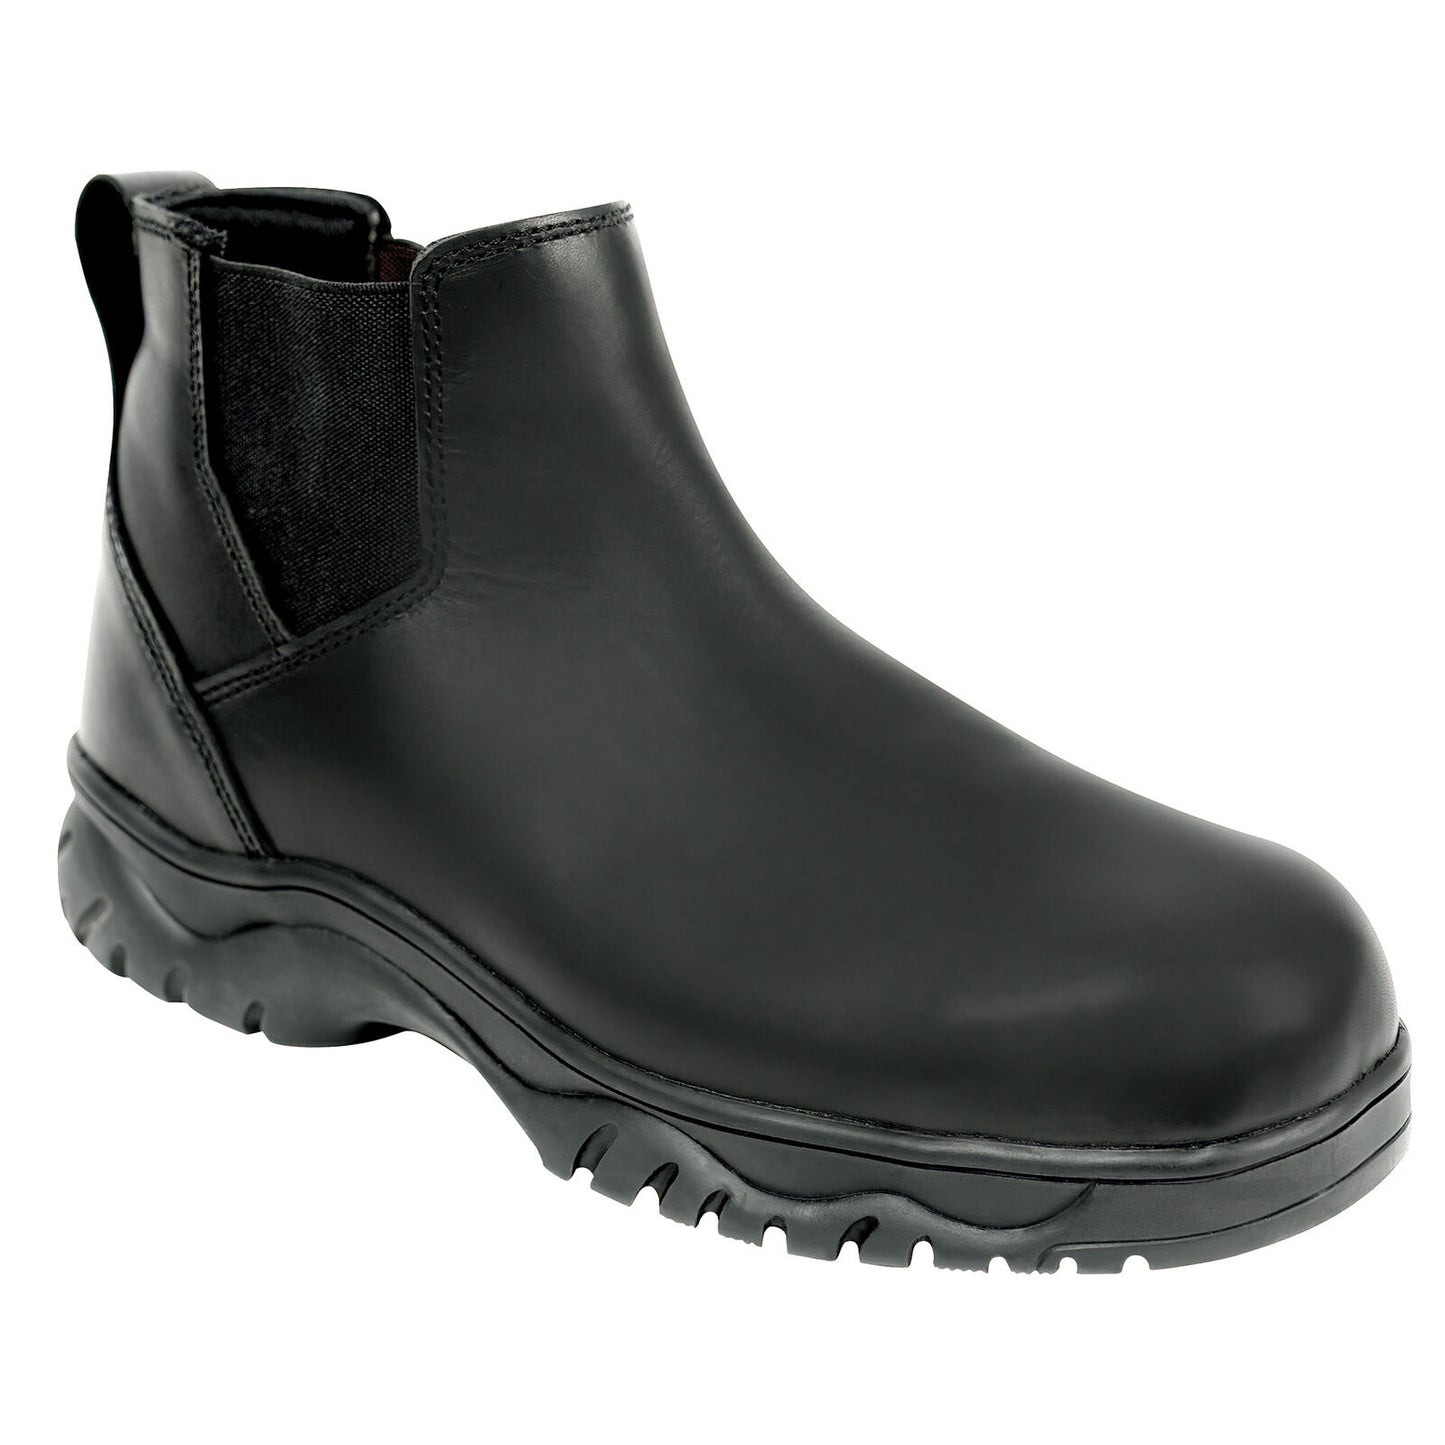 Men's Black Chelsea Work Boots - Slip-On Boot With Oil & Slip Resistant Sole